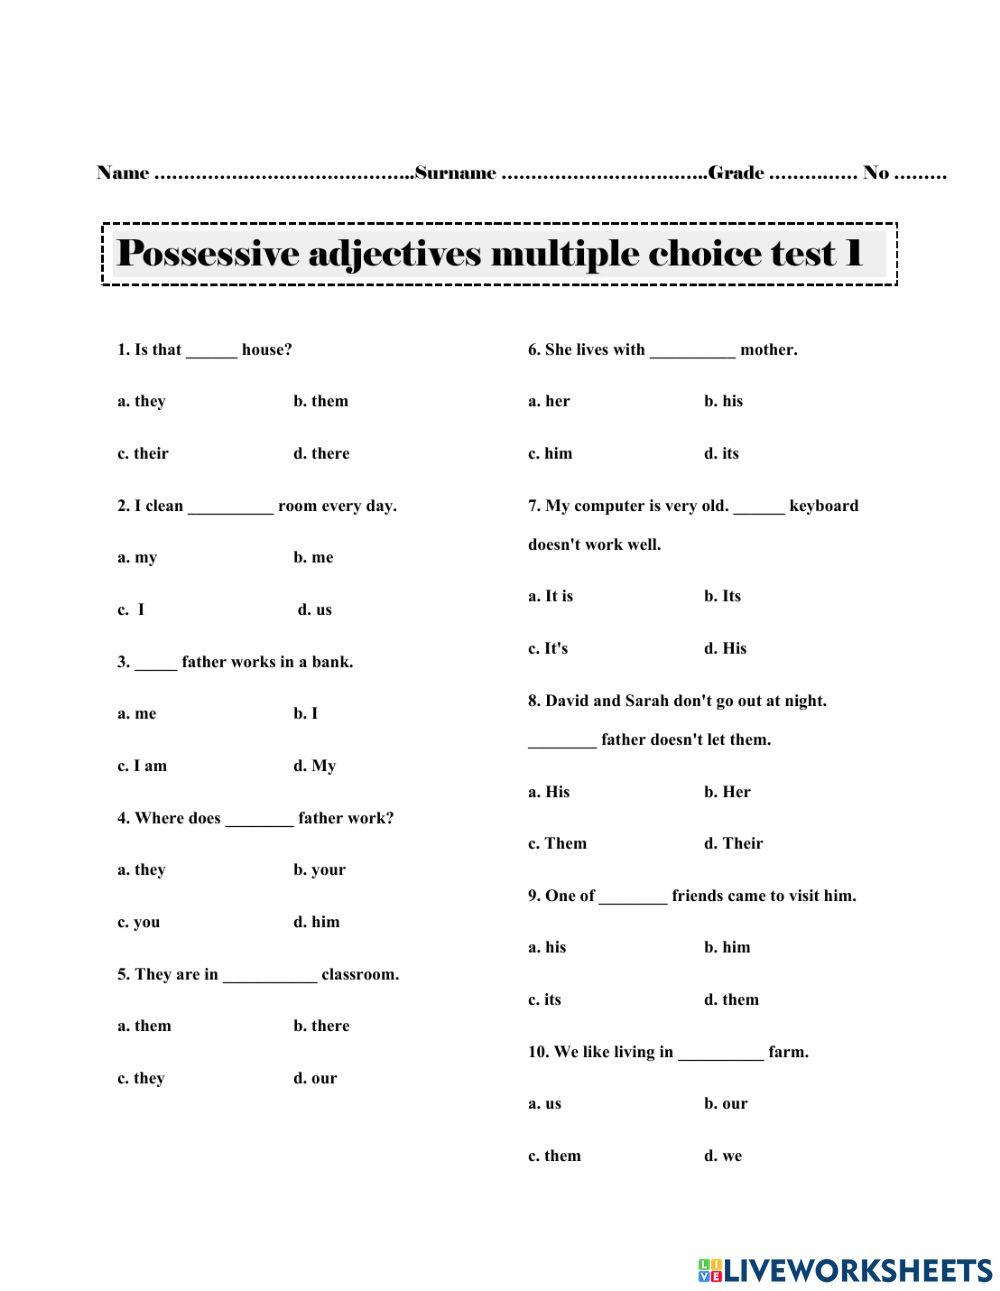 Possessive adjectives multiple choice test 1